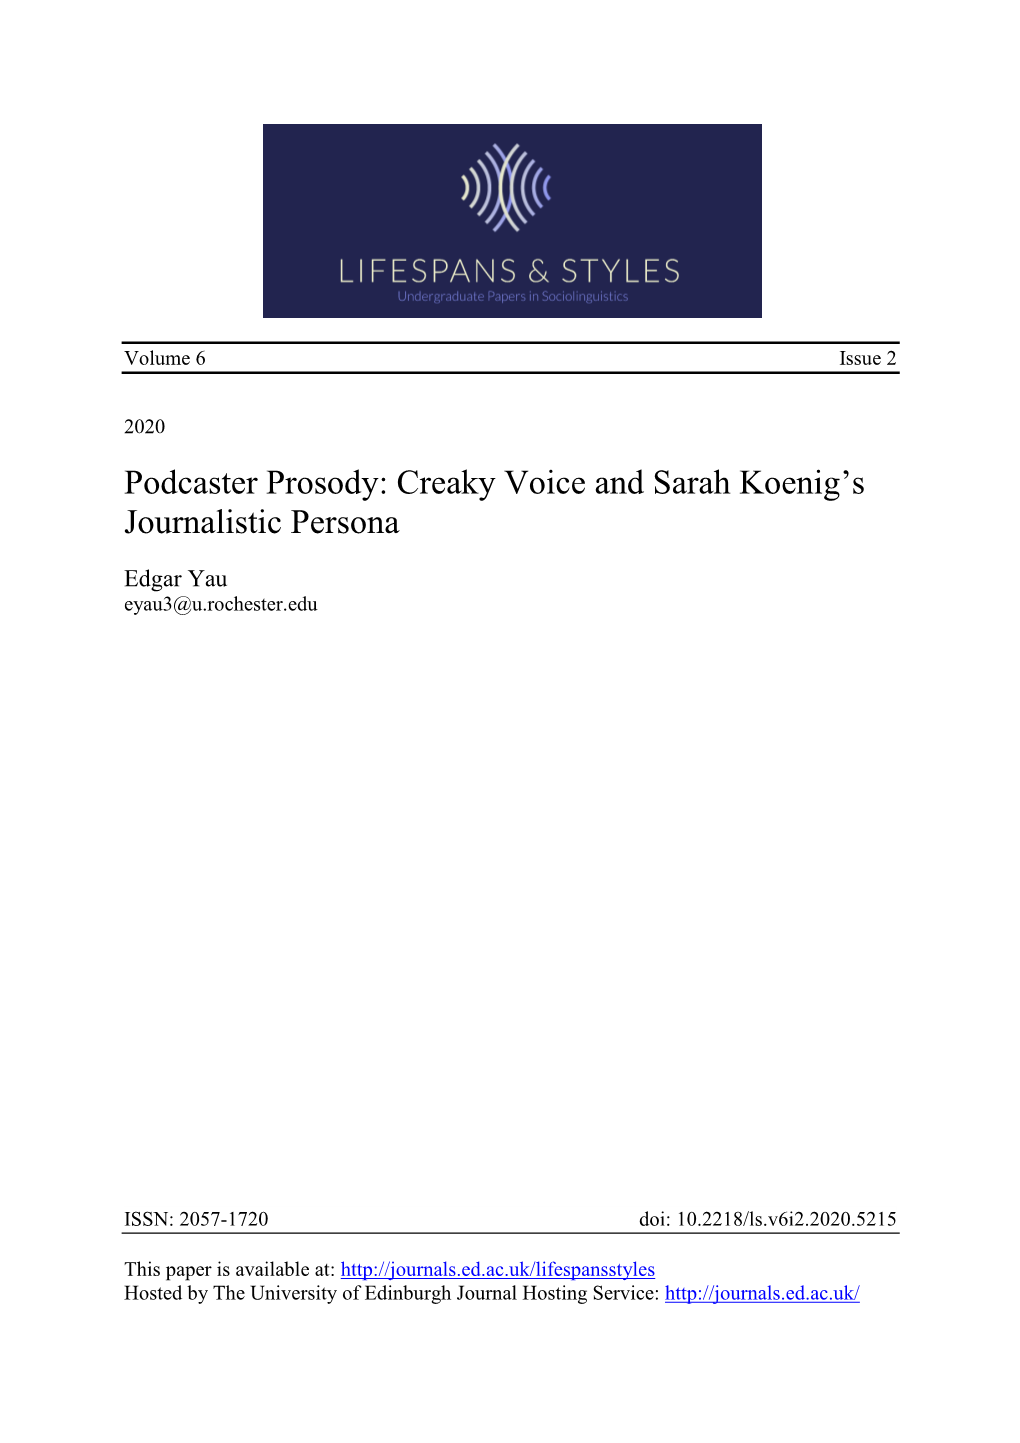 Podcaster Prosody: Creaky Voice and Sarah Koenig's Journalistic Persona